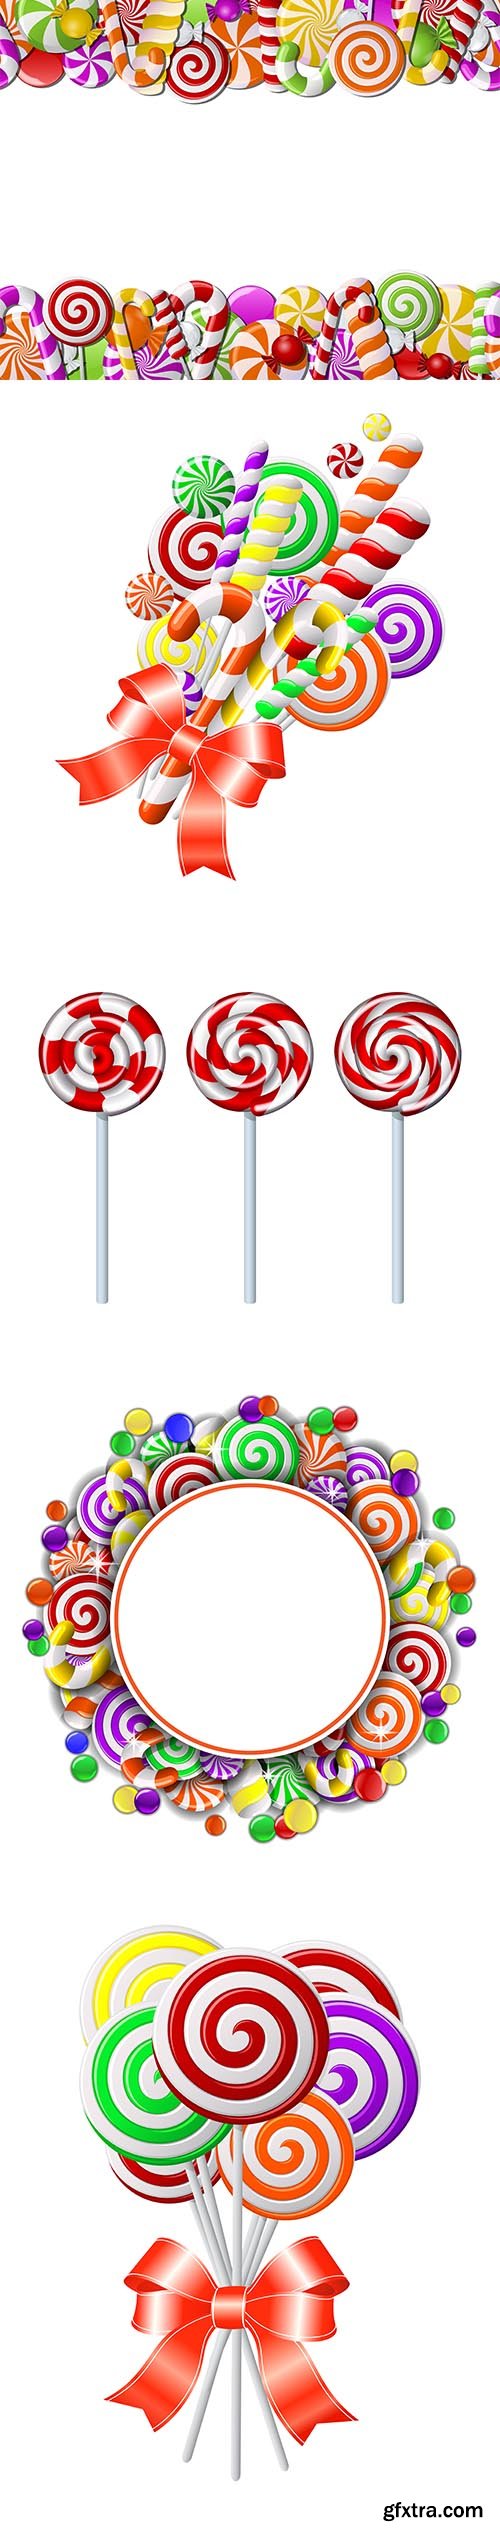 Delicious Colorful Lollipop Collection